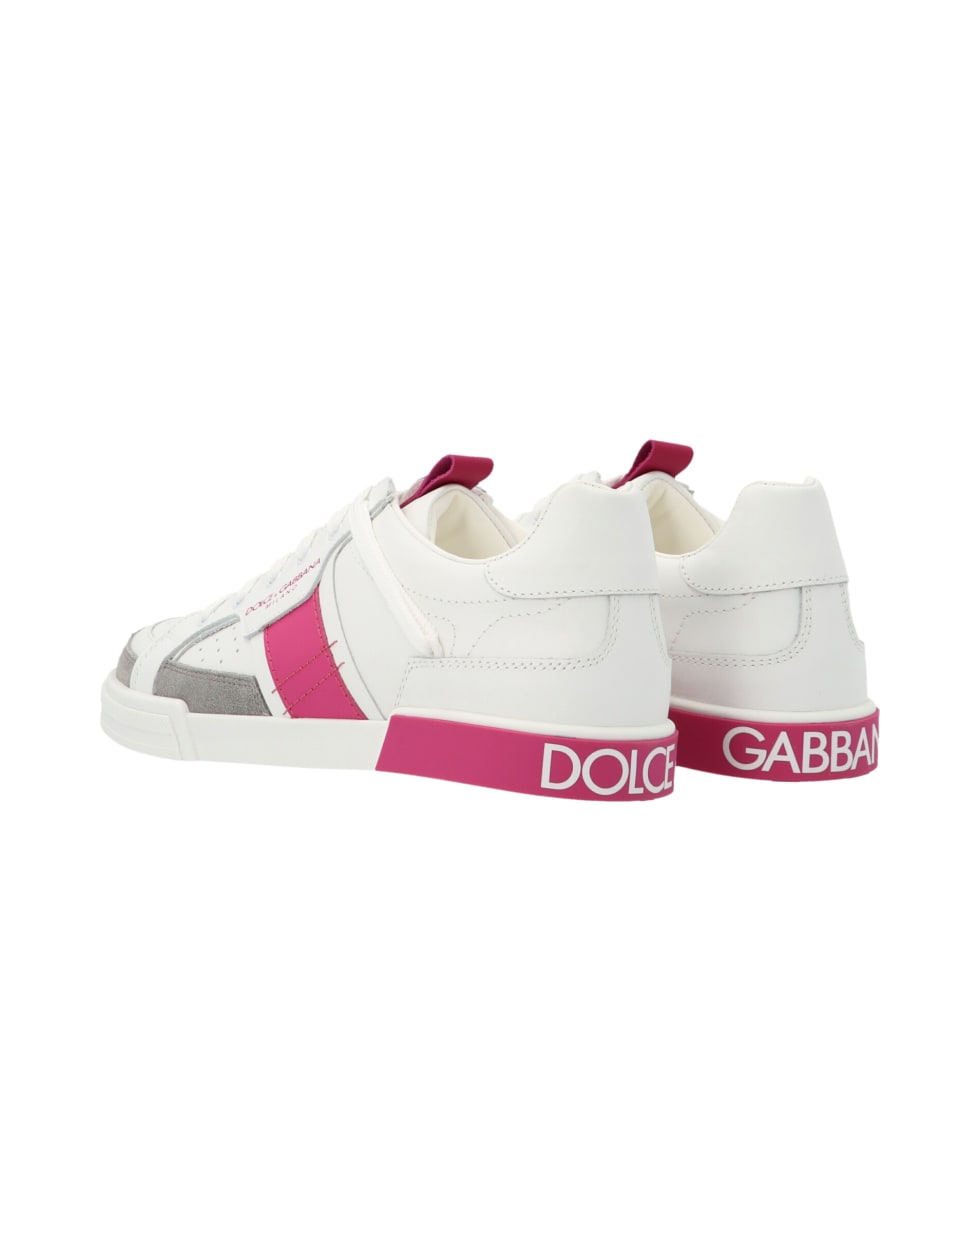 Dolce & Gabbana 'pop' Shoes - White